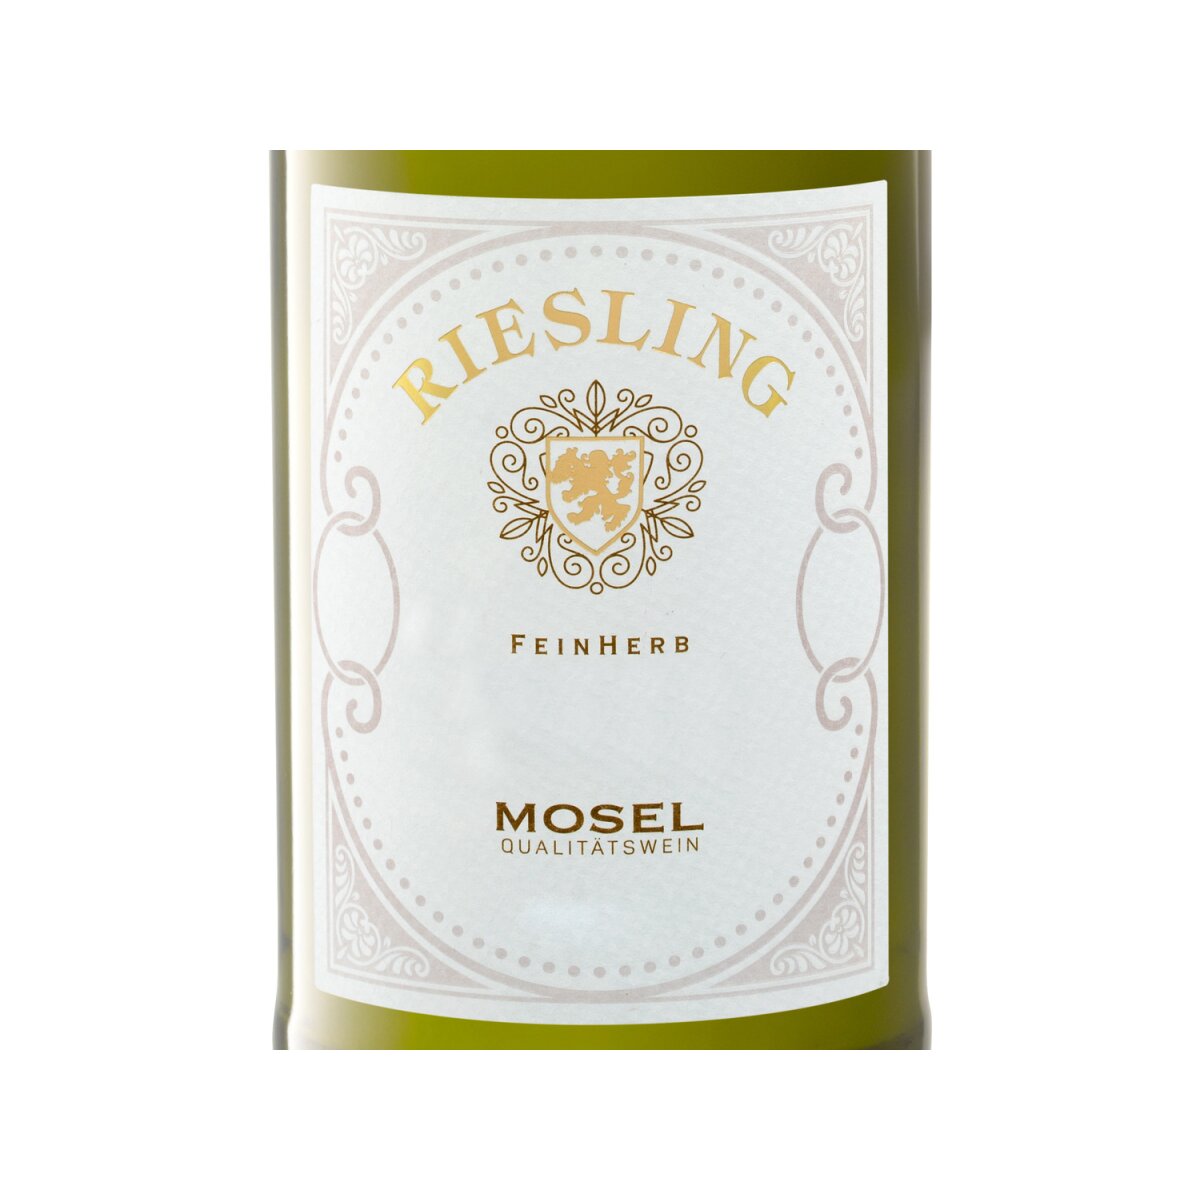 Brauneberger Kurfürstlay Riesling Mosel feinherb, 2,99 QbA € 2022, Weißwein